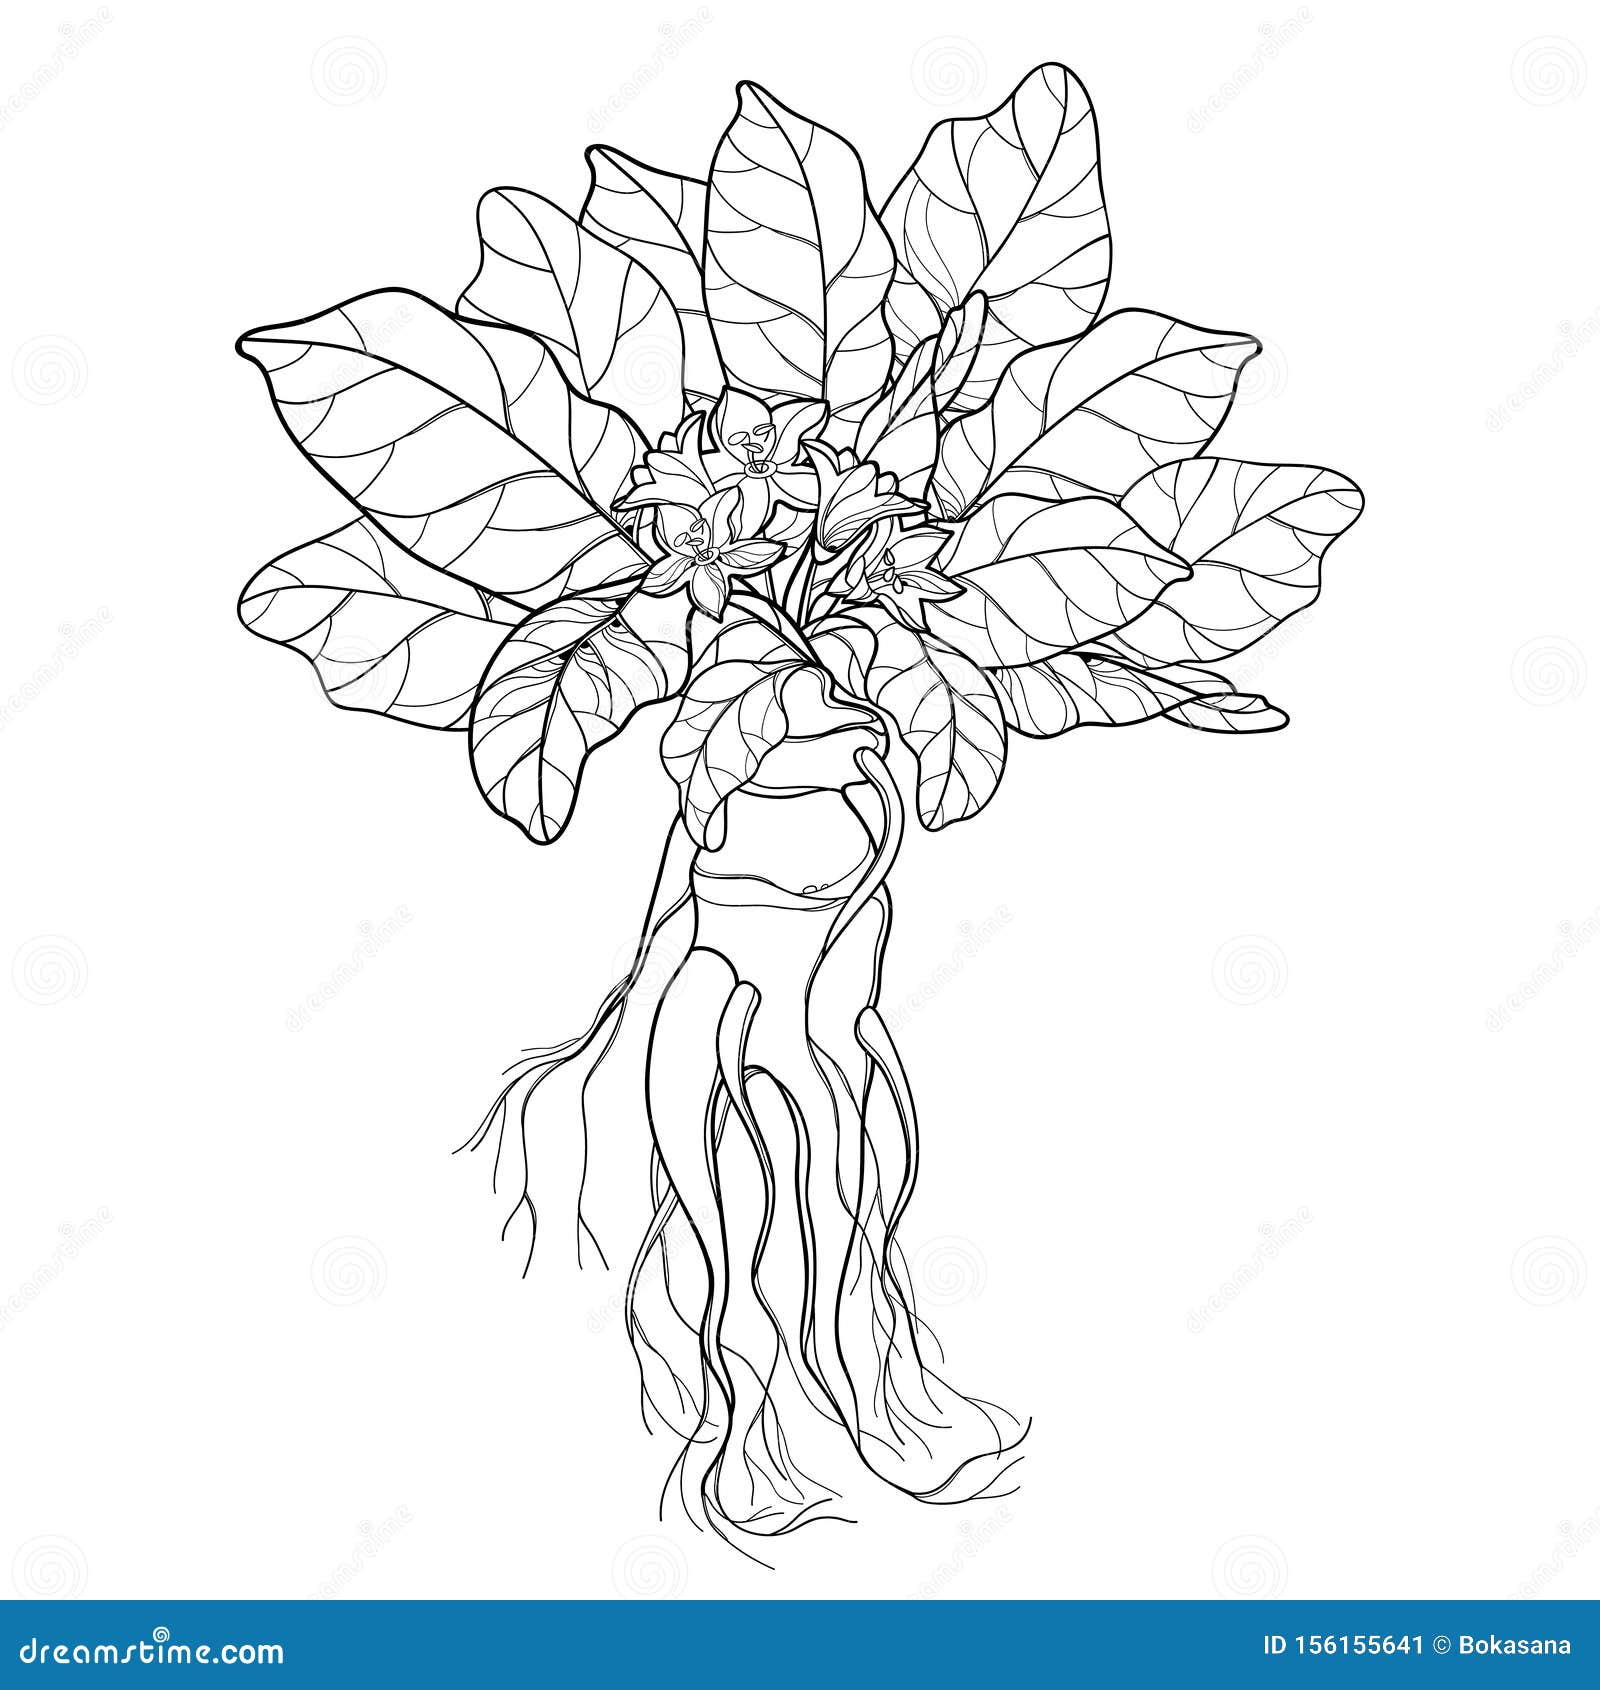 Vetor de Hand drawing mandrake. Black outline. Magic plant. Coloring page.  do Stock